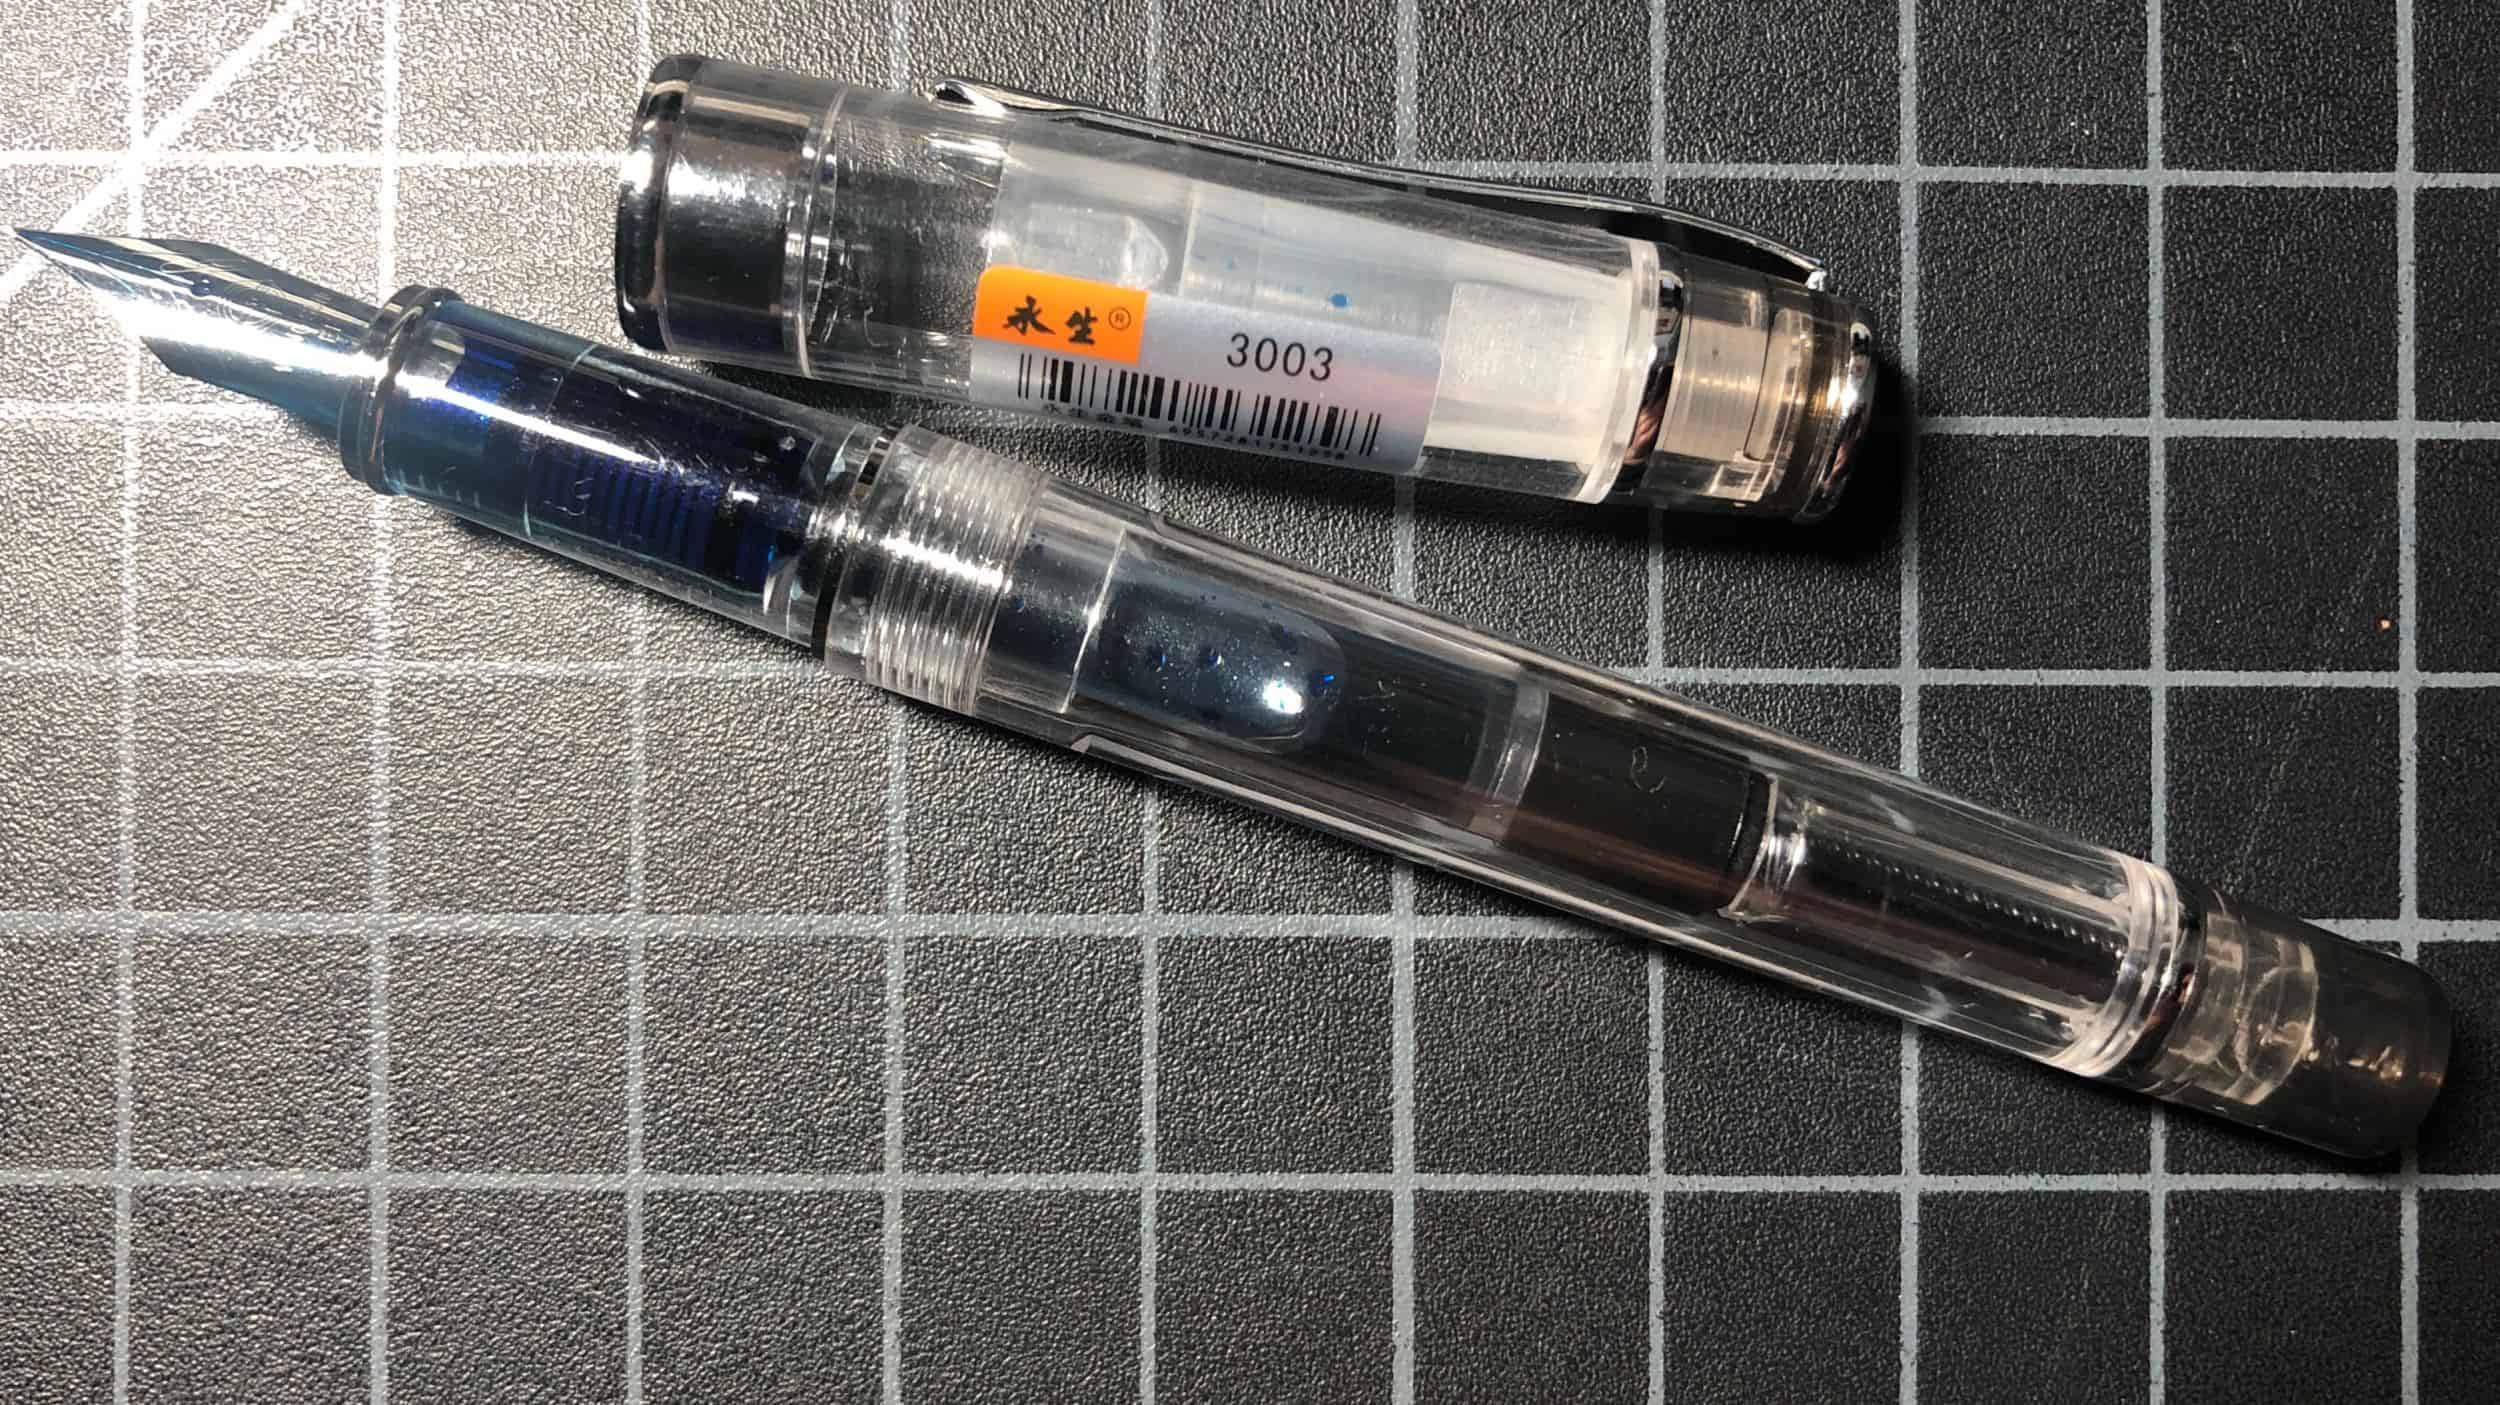 Mojiang M2 Transparent Acrylic Clear Eyedropper Fountain Pen F Nib Ink Pen